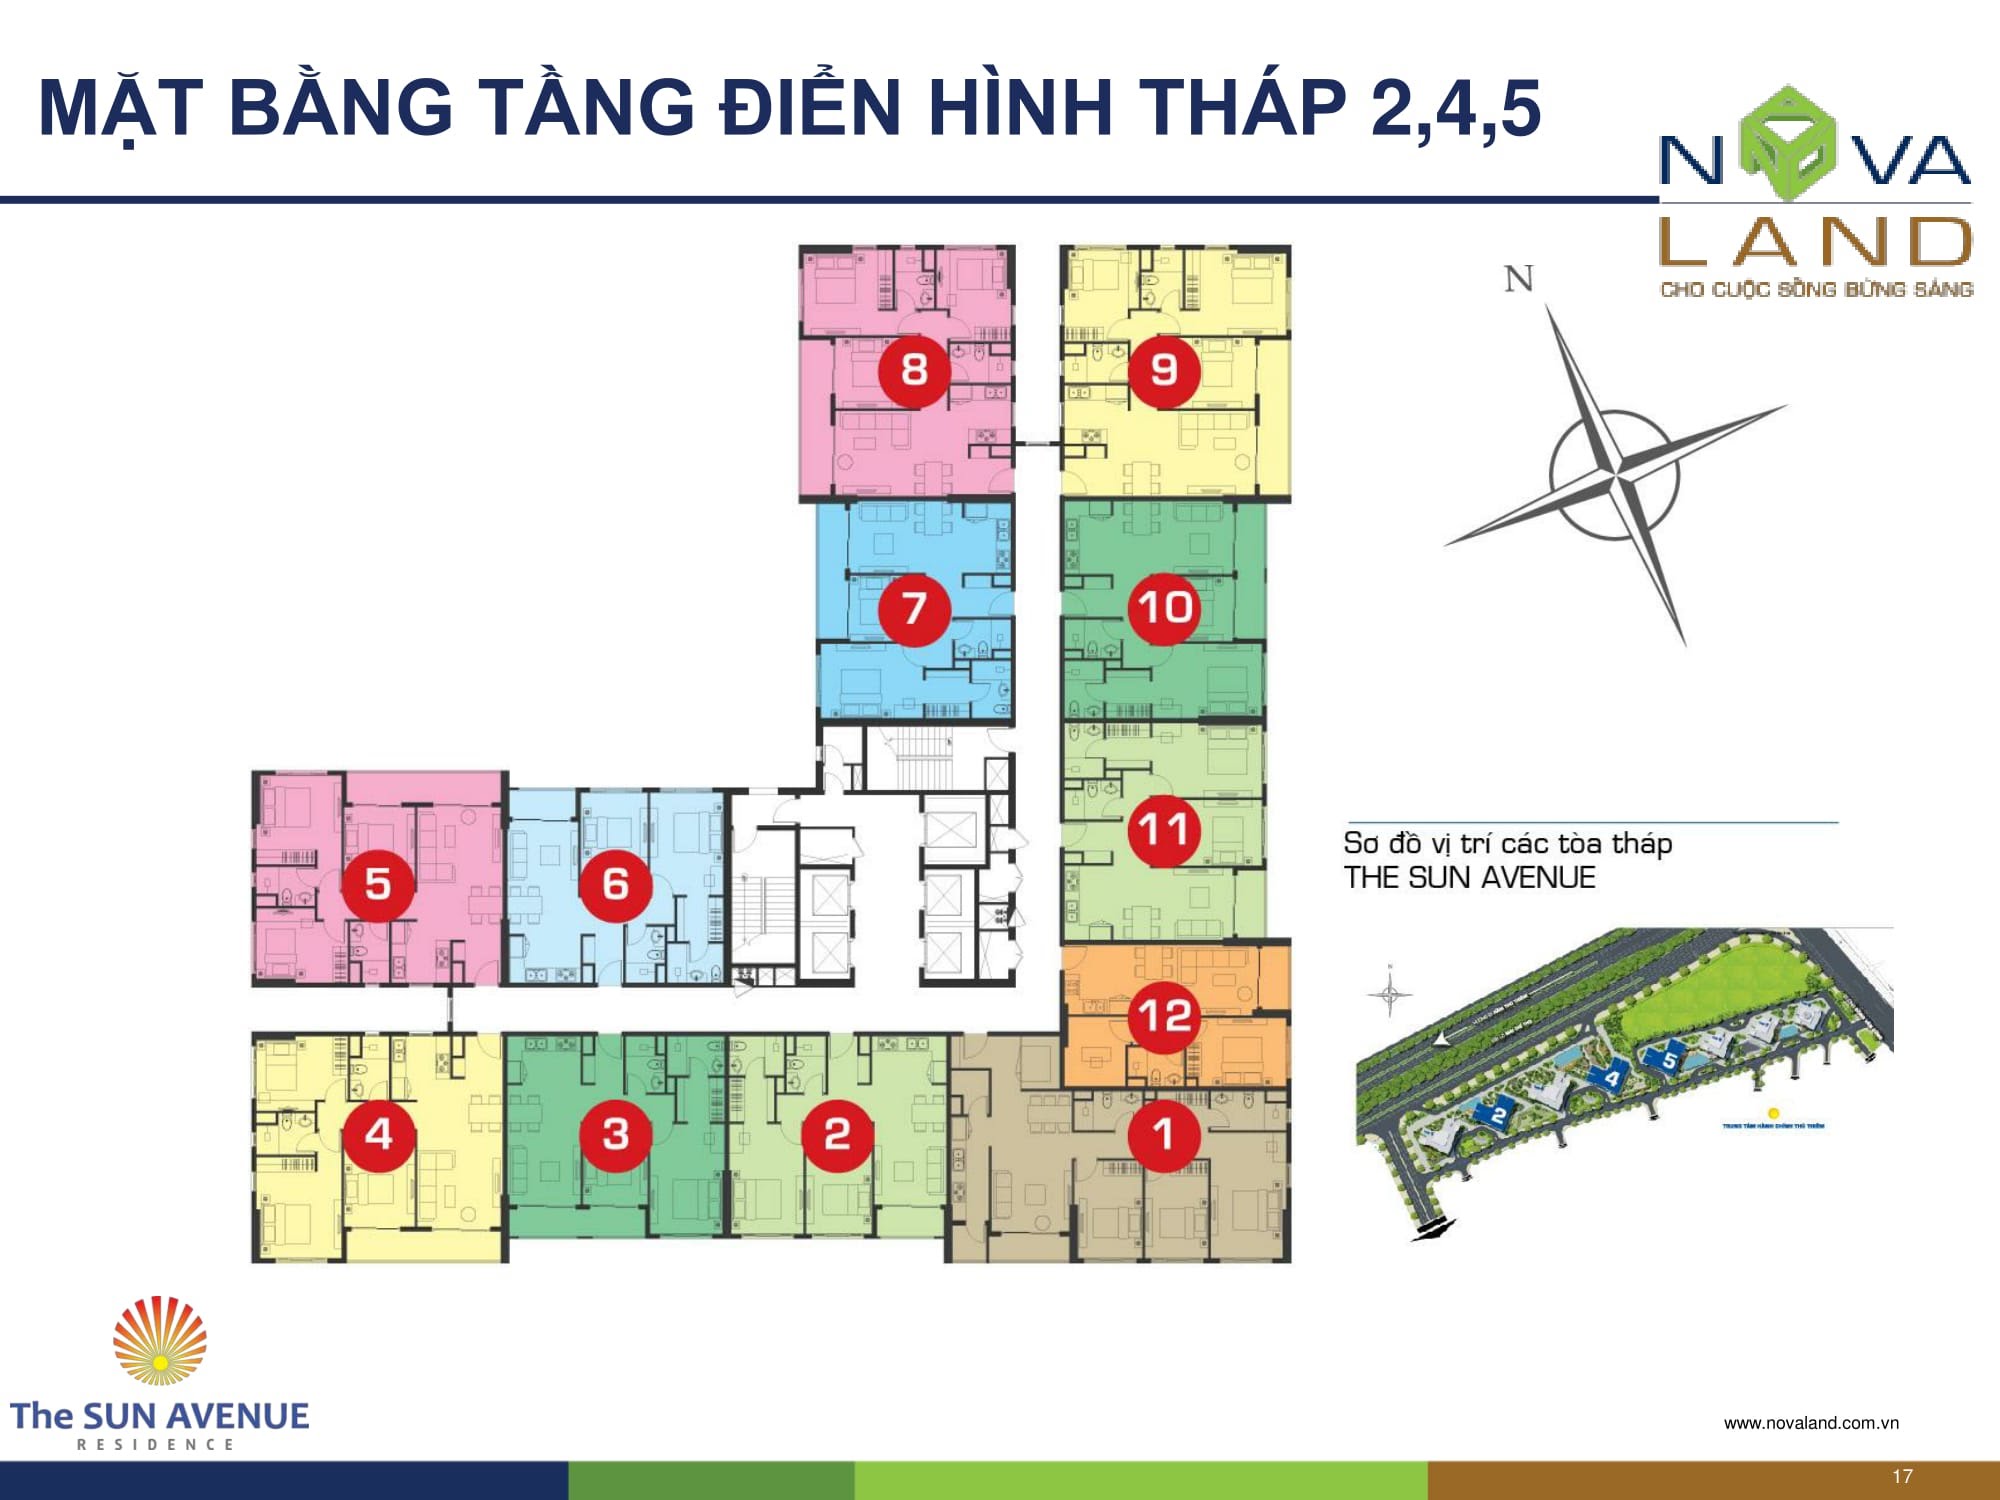 layout-mat-bang-tang-dien-hinh-thap-2-4-5-the-sun-avenue